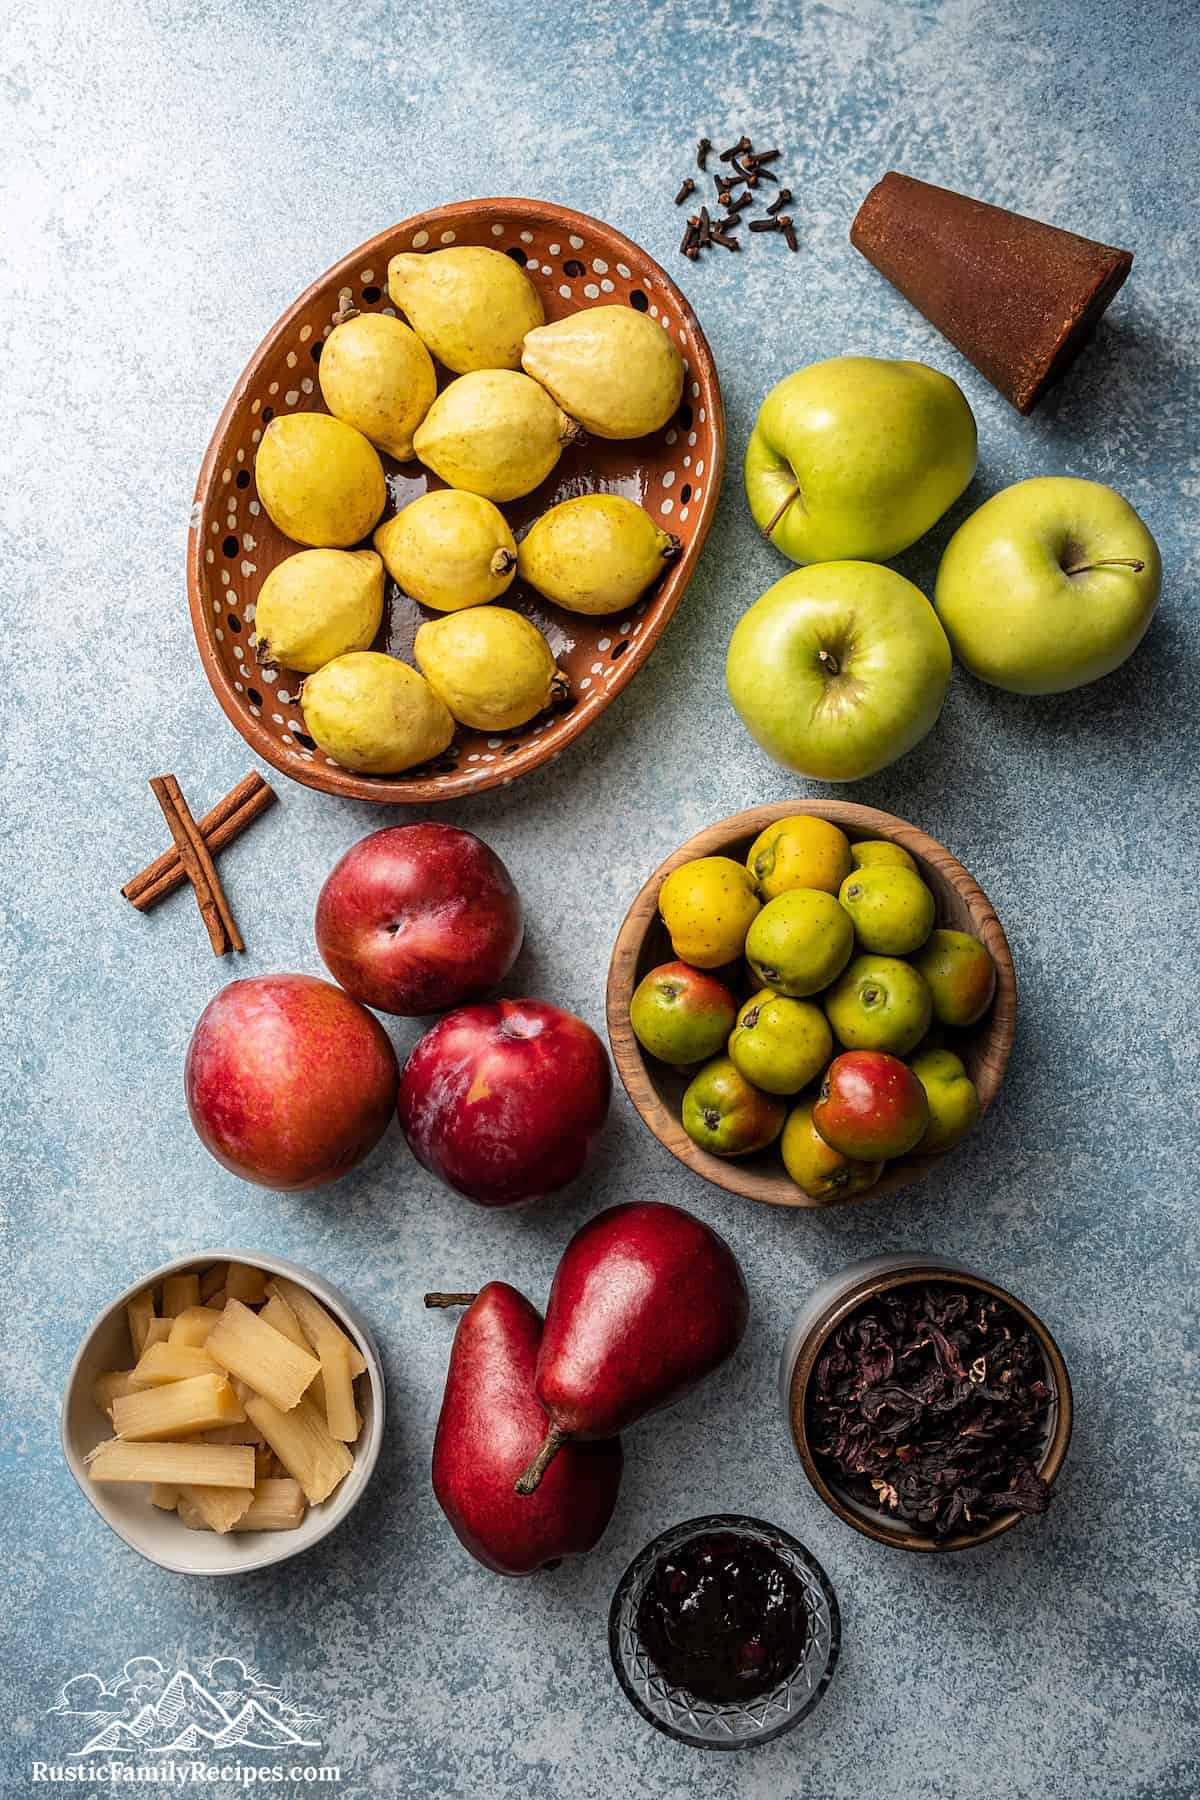 Ingredients for ponche de frutas navideño